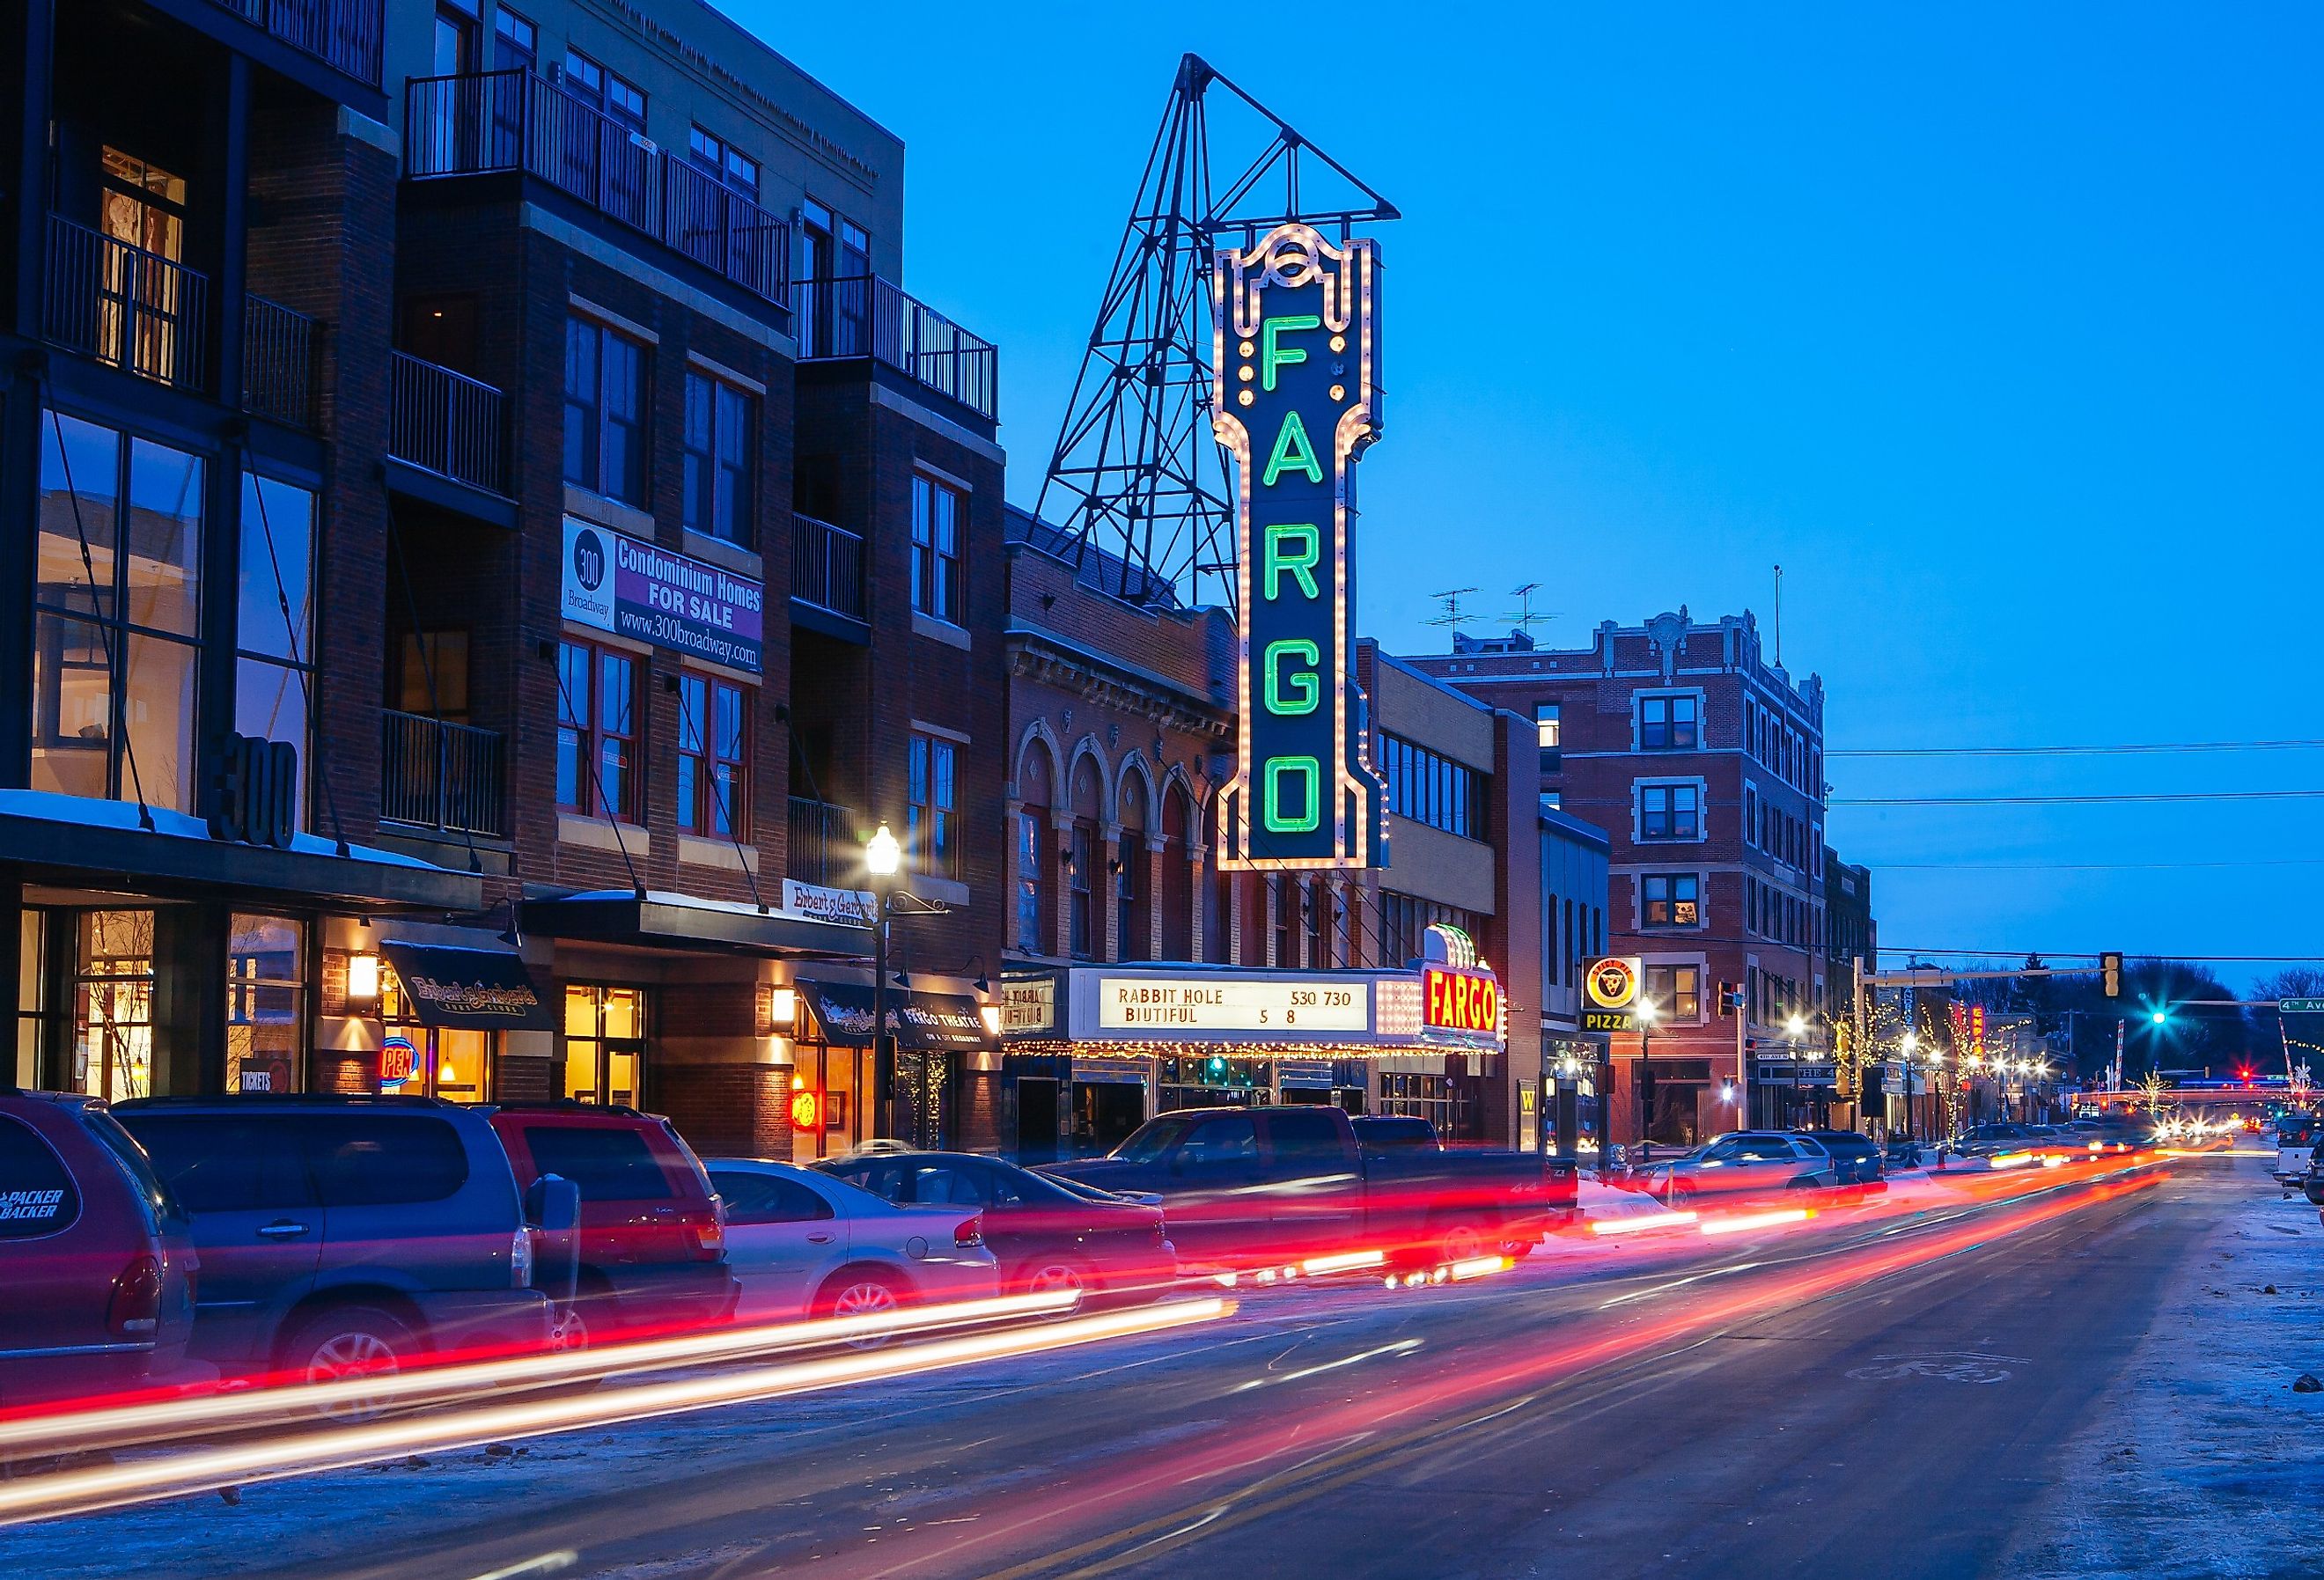 Fargo, North Dakota. Lights on Fargo Theater with street lined with cars. Image credit FiledIMAGE via AdobeStock.